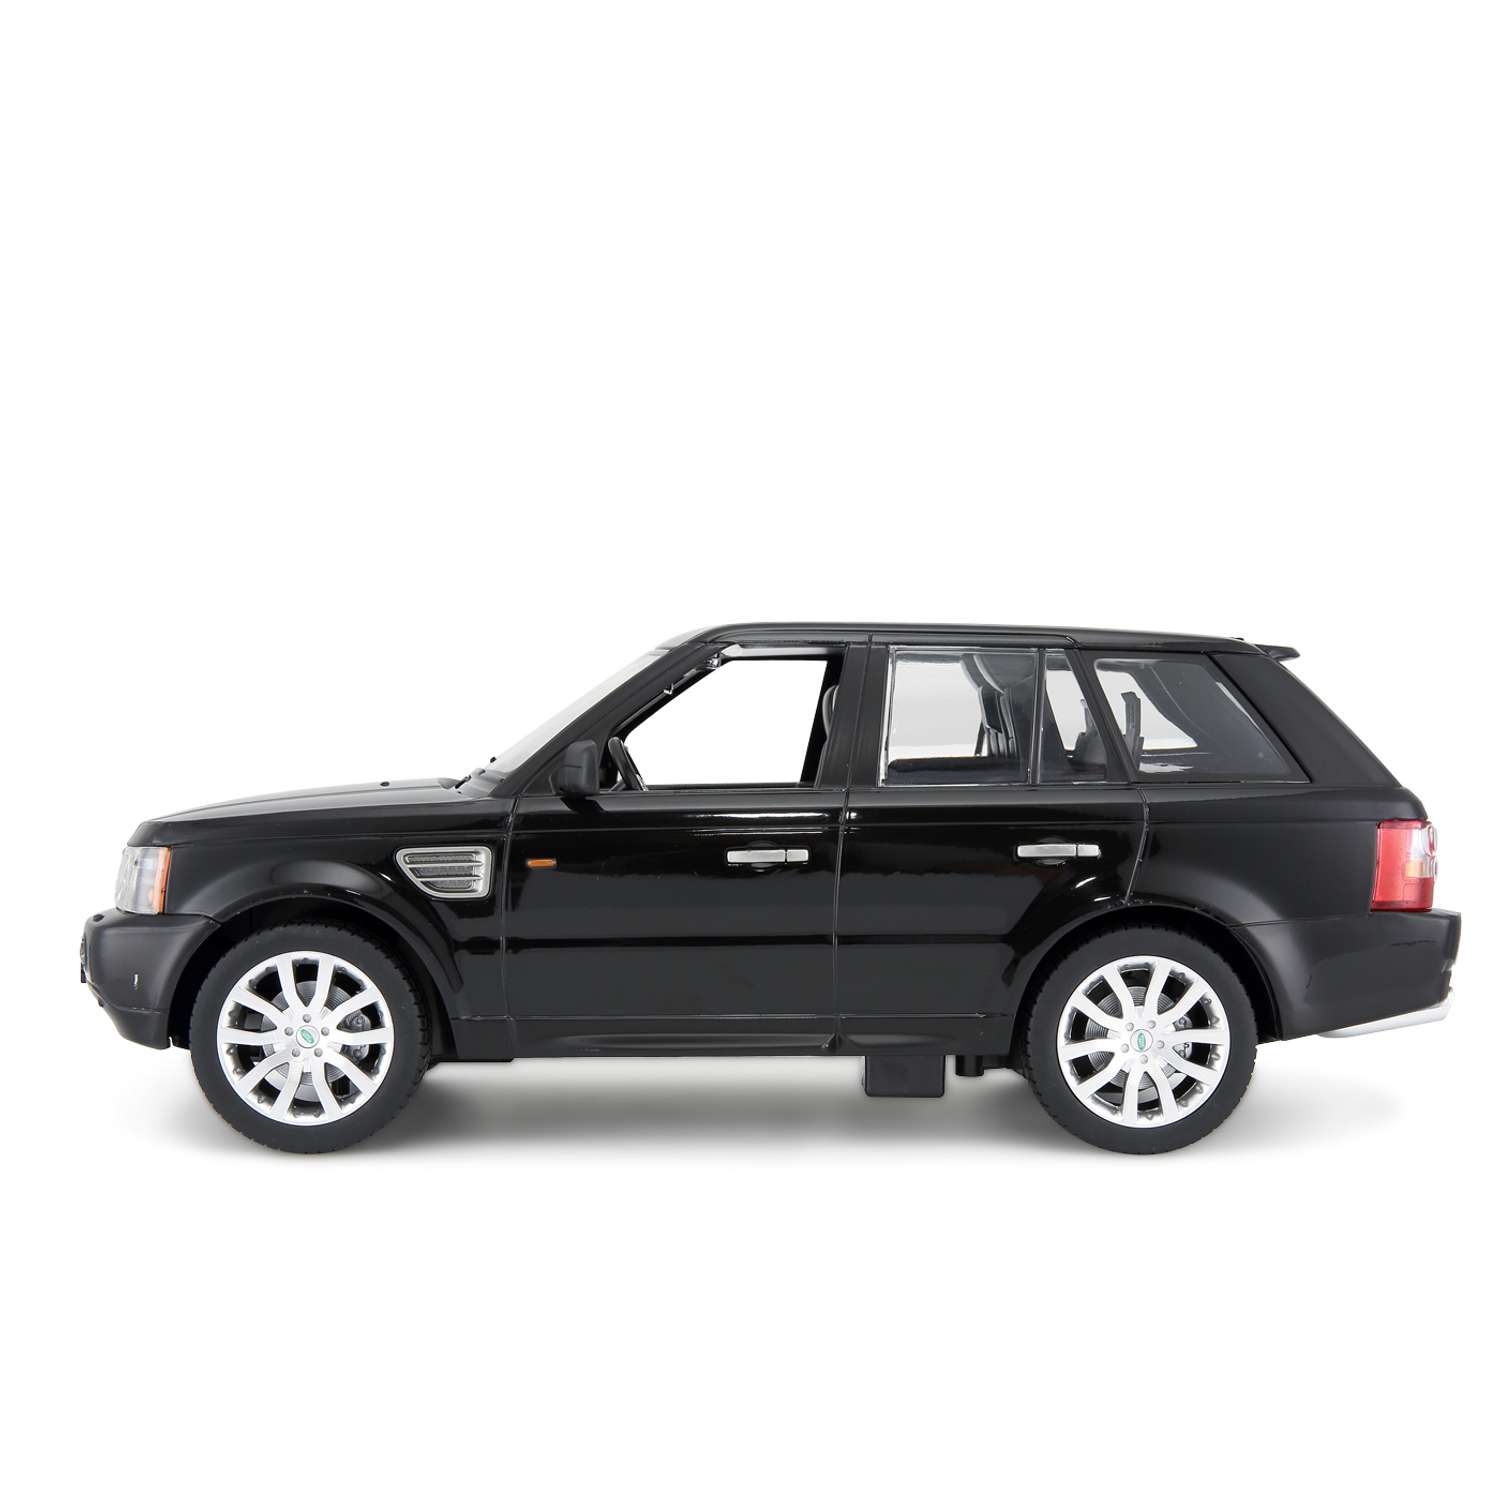 Машинка р/у Rastar Range Rover Sport 1:14 черная - фото 3